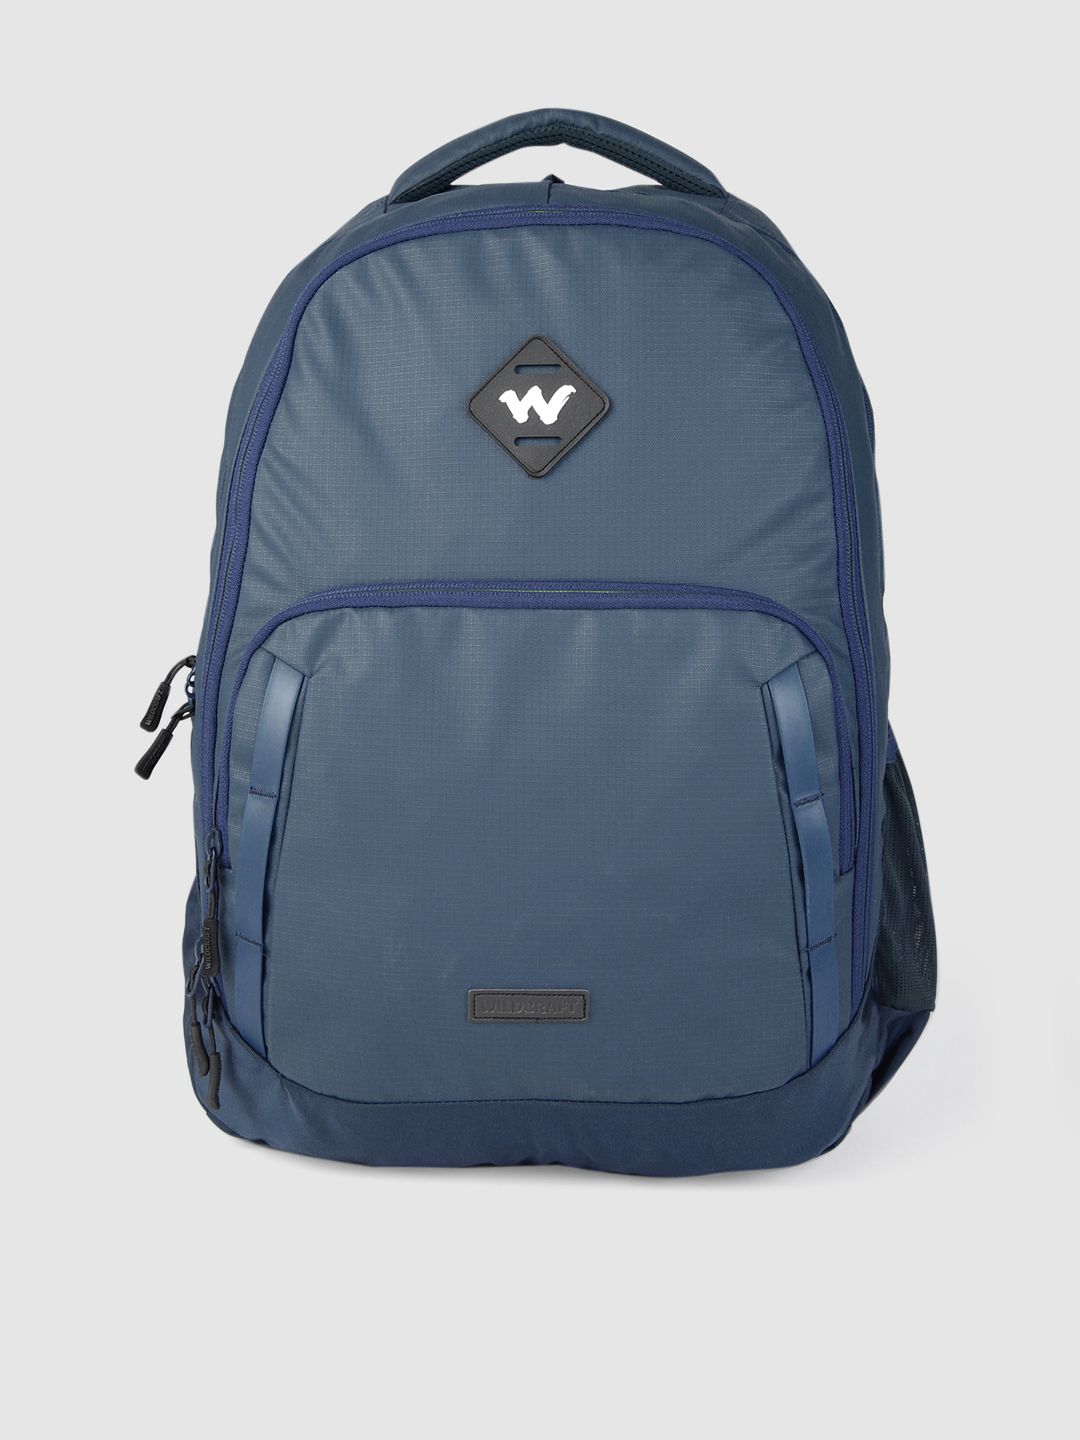 Wildcraft Unisex Blue Imprint  1.0 Plus Backpack Price in India